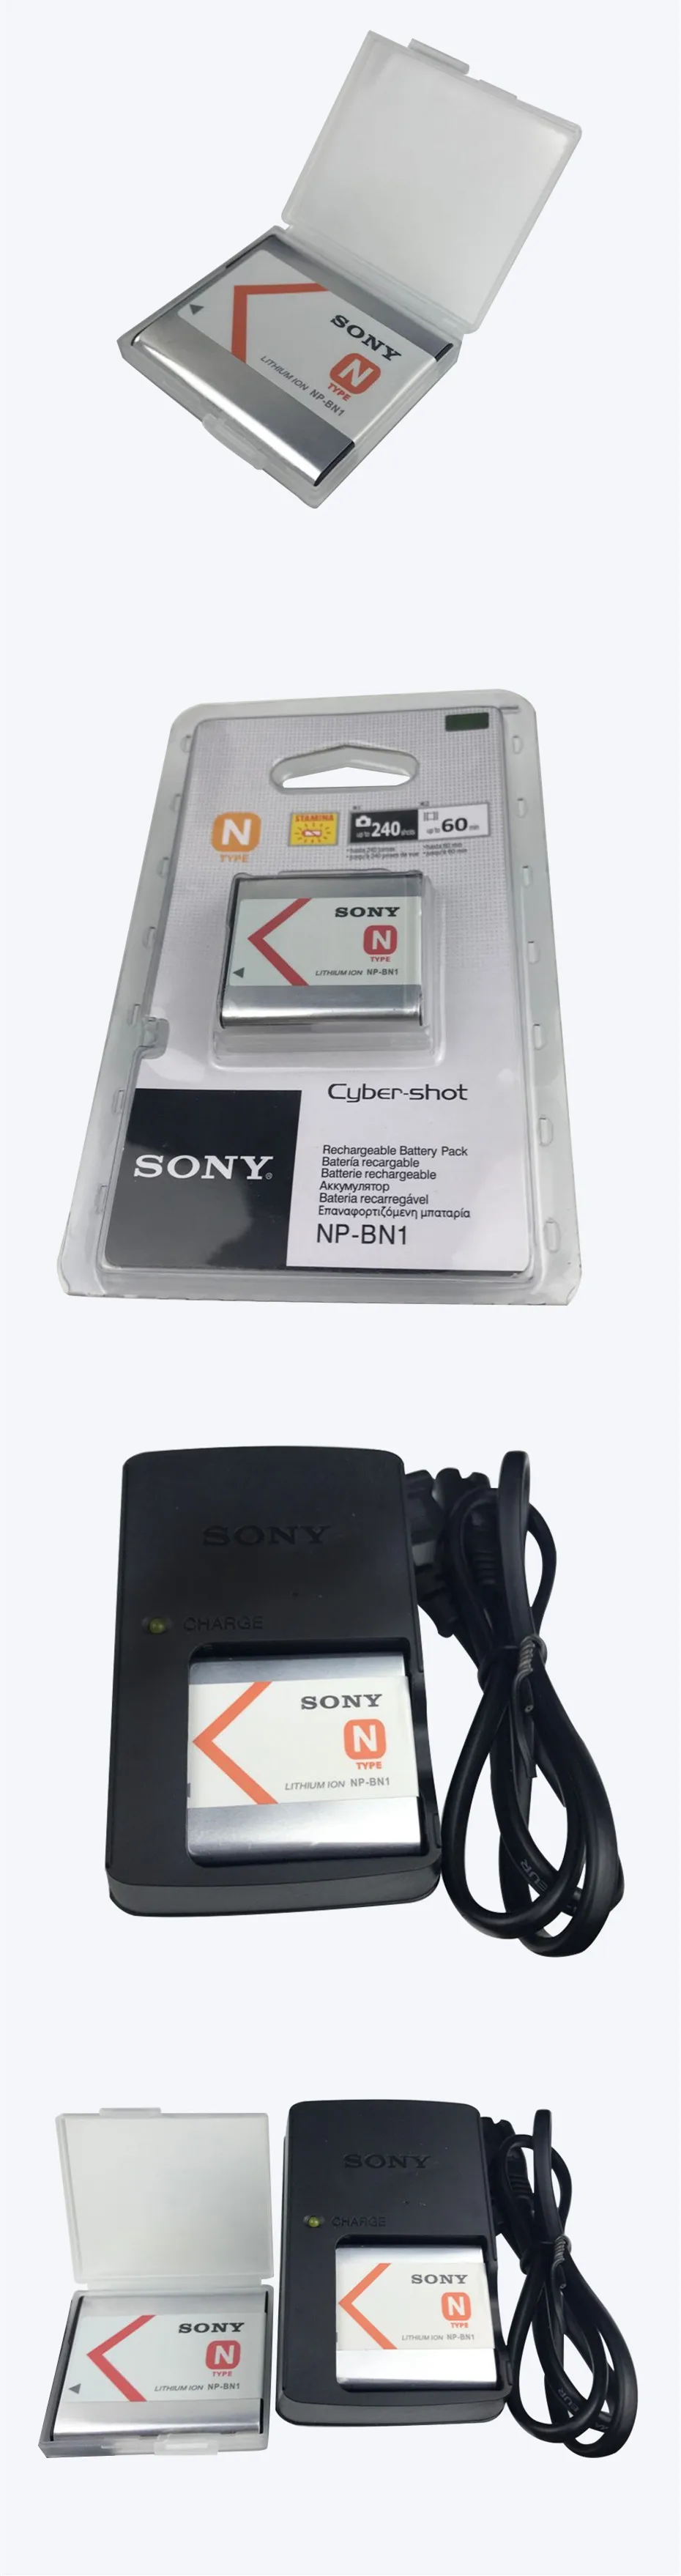 2 шт./лот sony NP-BN1 NPBN1 NP BN1 комплектующие фотоаппарата sony DSC TX9 T99 WX5 TX7 TX5 W390 W380 W350 W320 W310 W360 W330 QX100 W370 W730